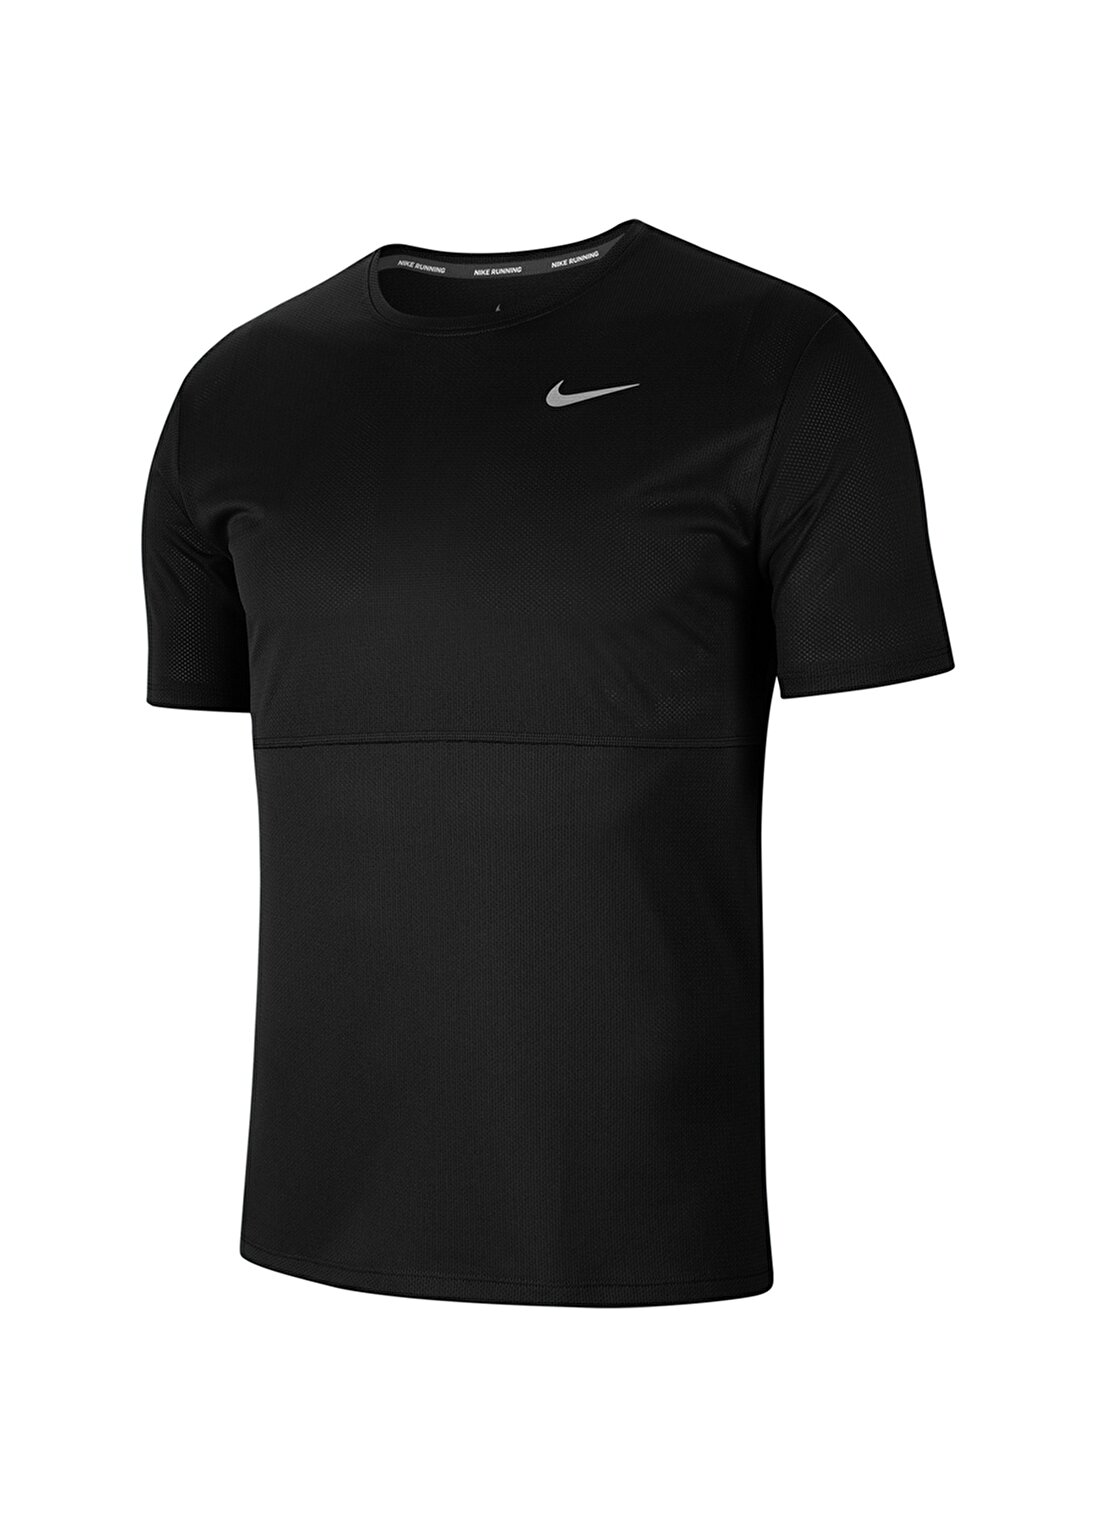 Nike CJ5332-010 M NK Breathe Run Top Ssbisiklet Yaka Kısa Kollu Logo Baskılı Siyah Erkek T-Shirt